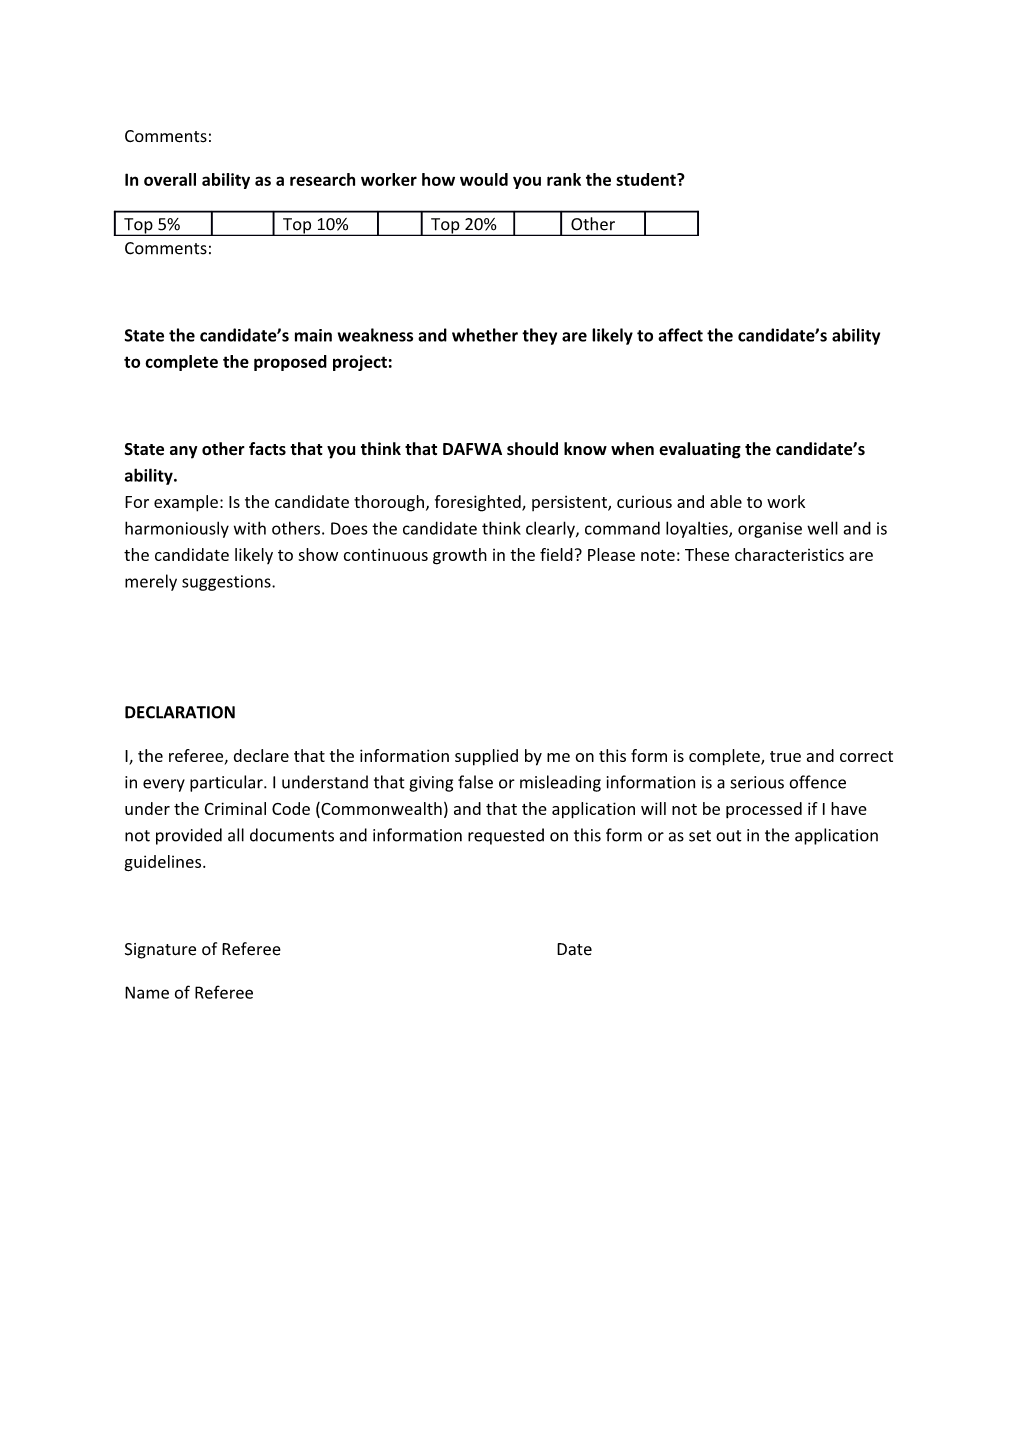 Grains R & D Postgraduate Scholarship Referee Report